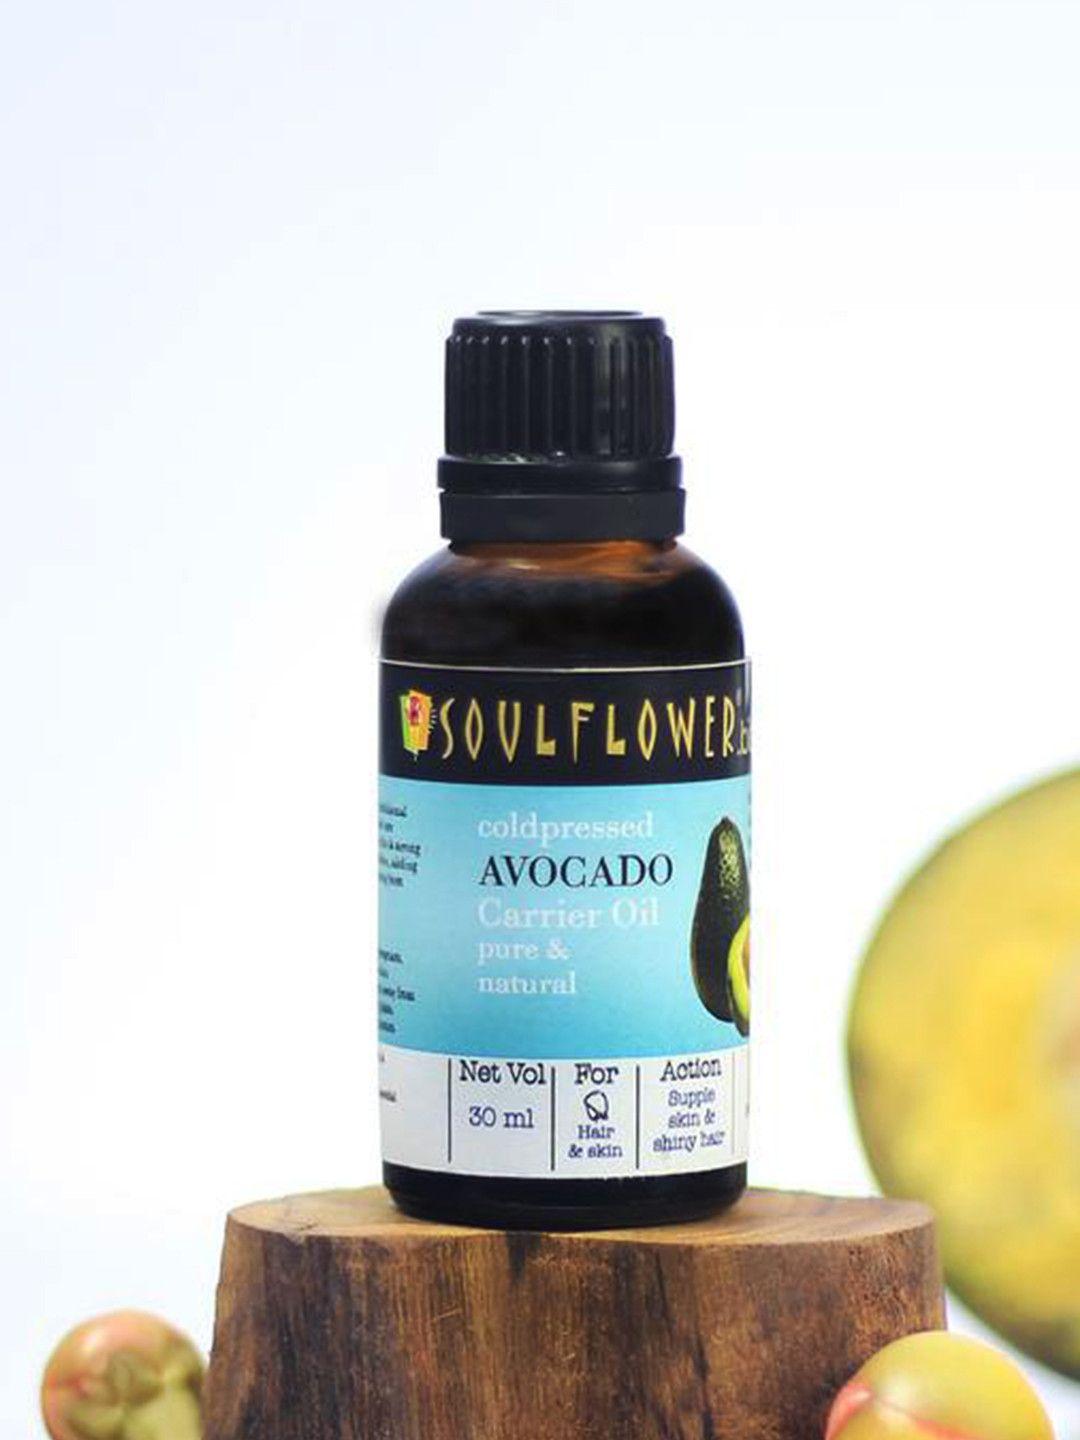 soulflower cold pressed avocado hair oil for scalp nourishment hair fall & skin 30ml